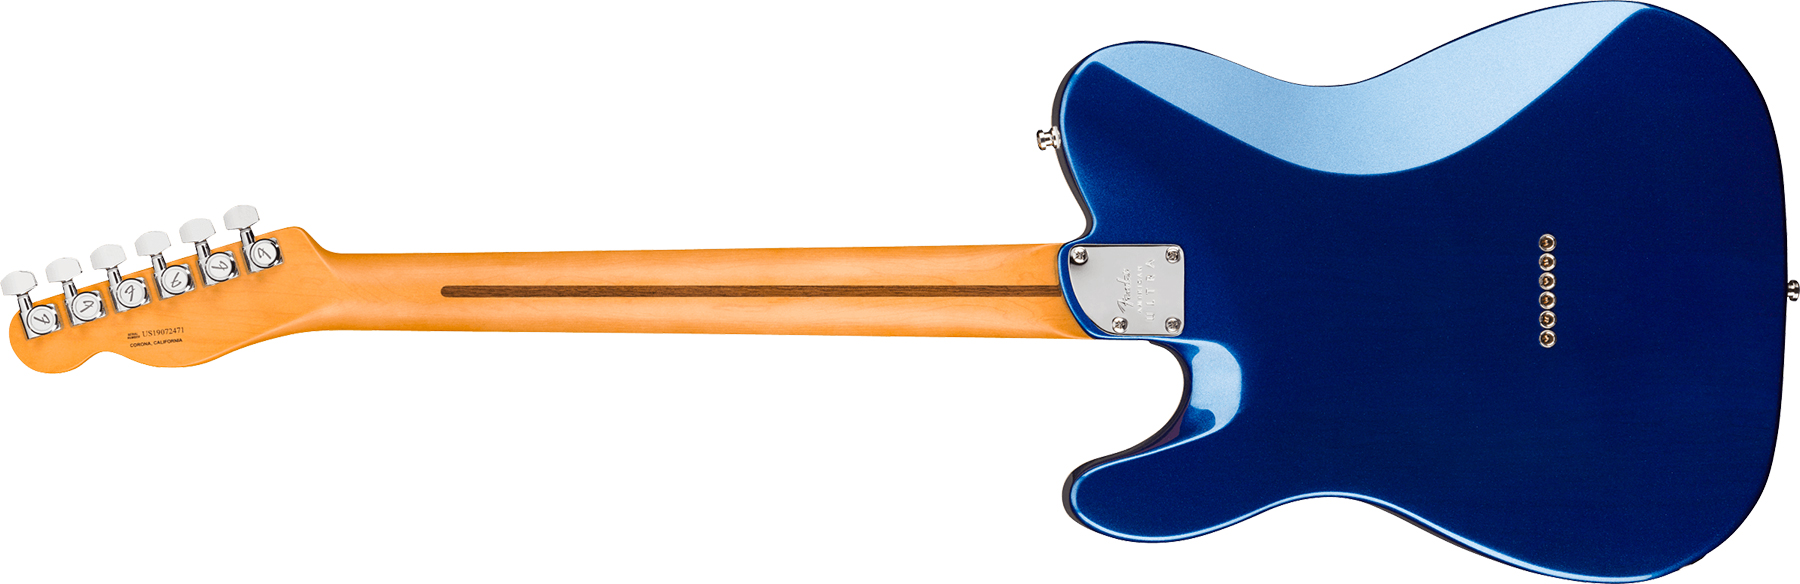 Fender Tele American Ultra 2019 Usa Mn - Cobra Blue - Televorm elektrische gitaar - Variation 1